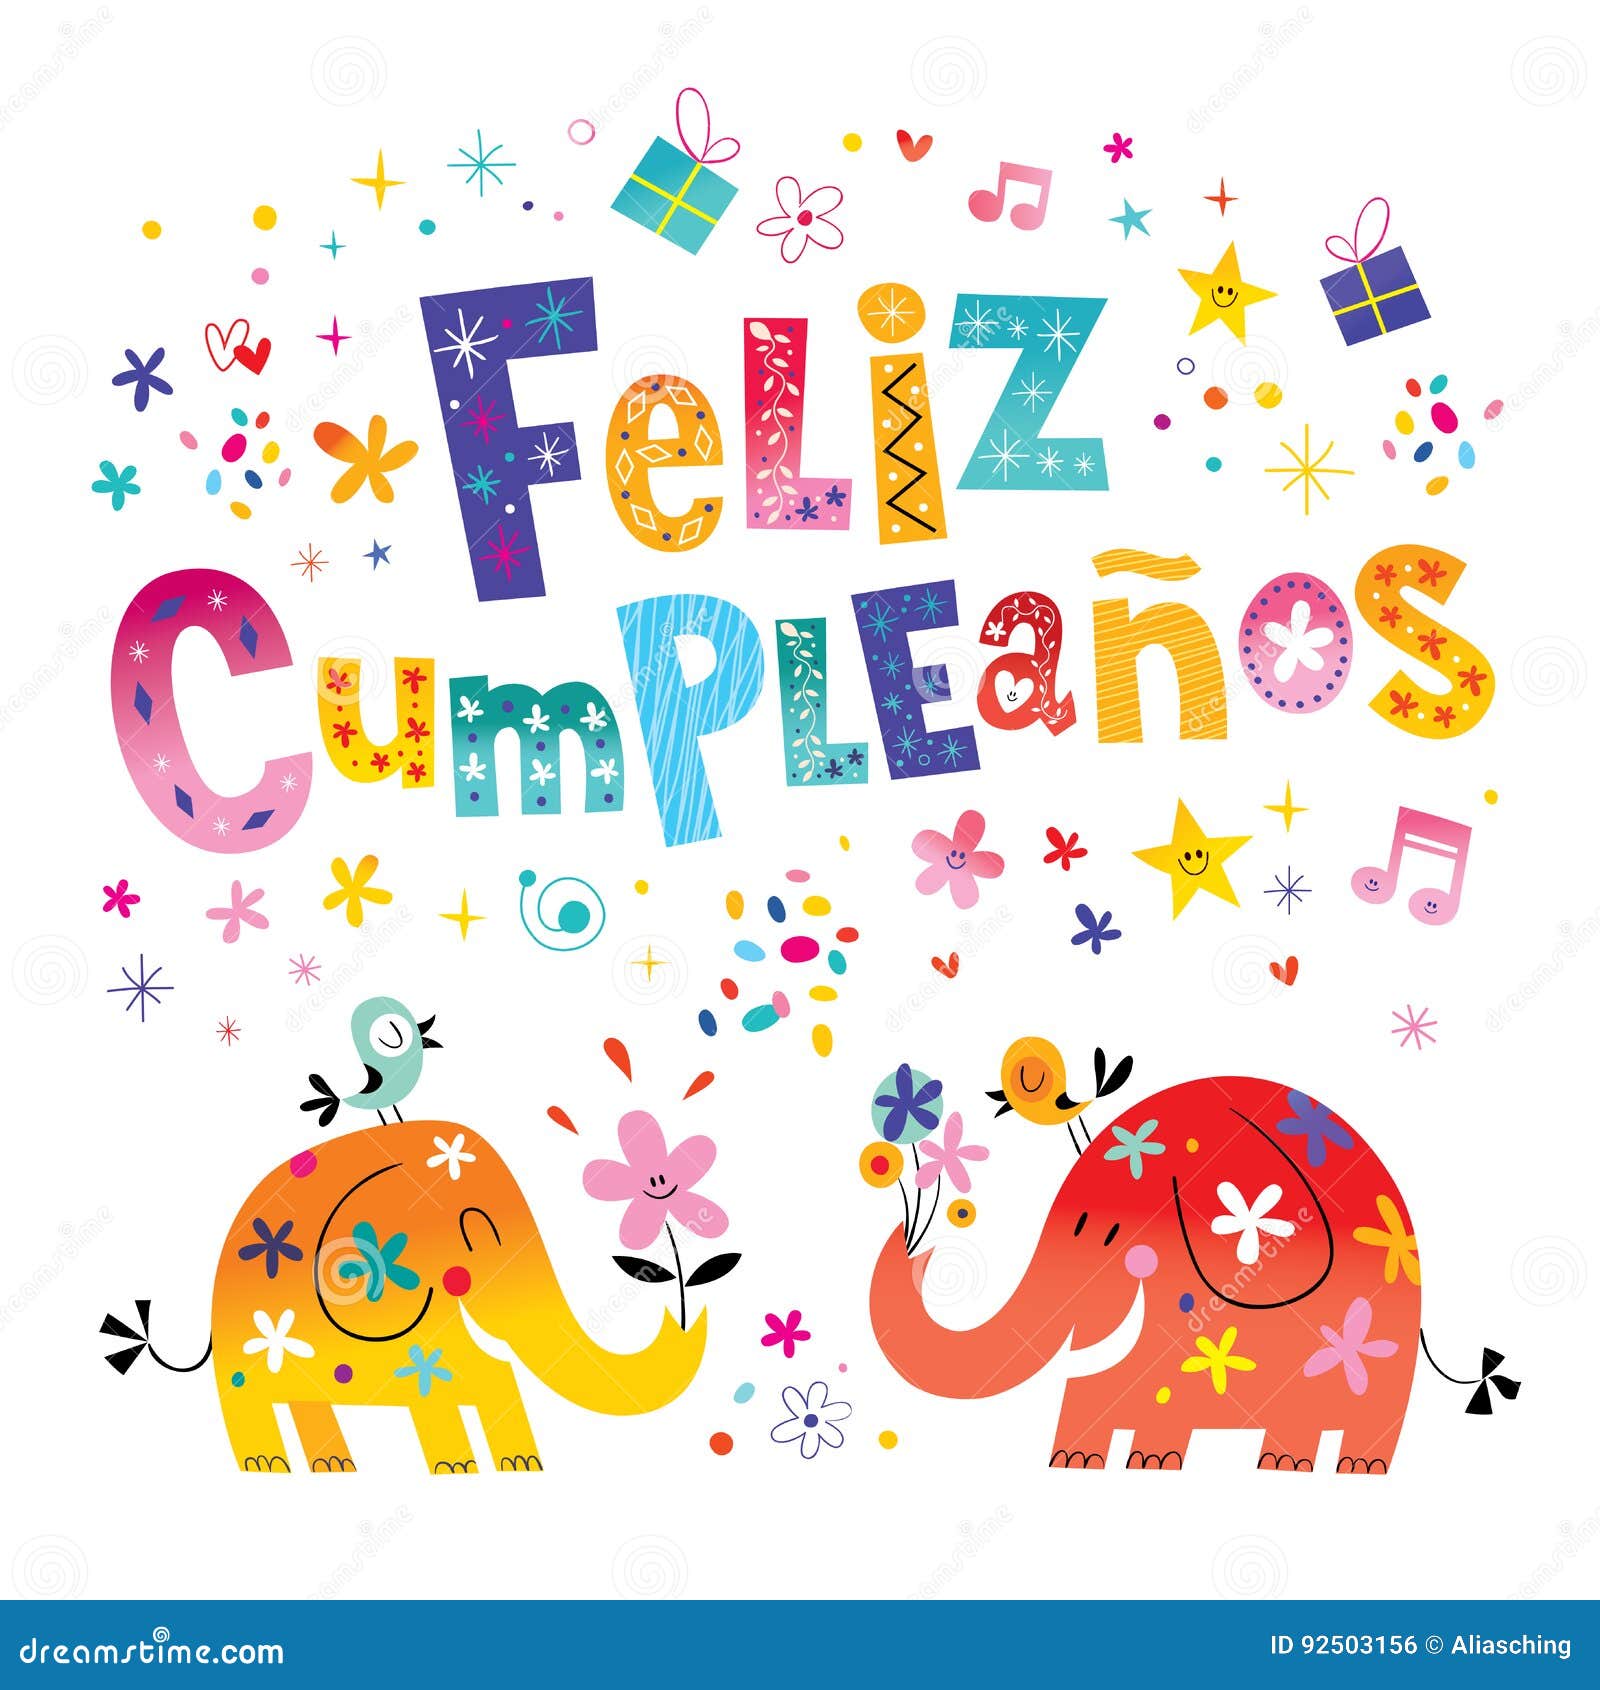 feliz cumpleanos happy birthday in spanish greeting card